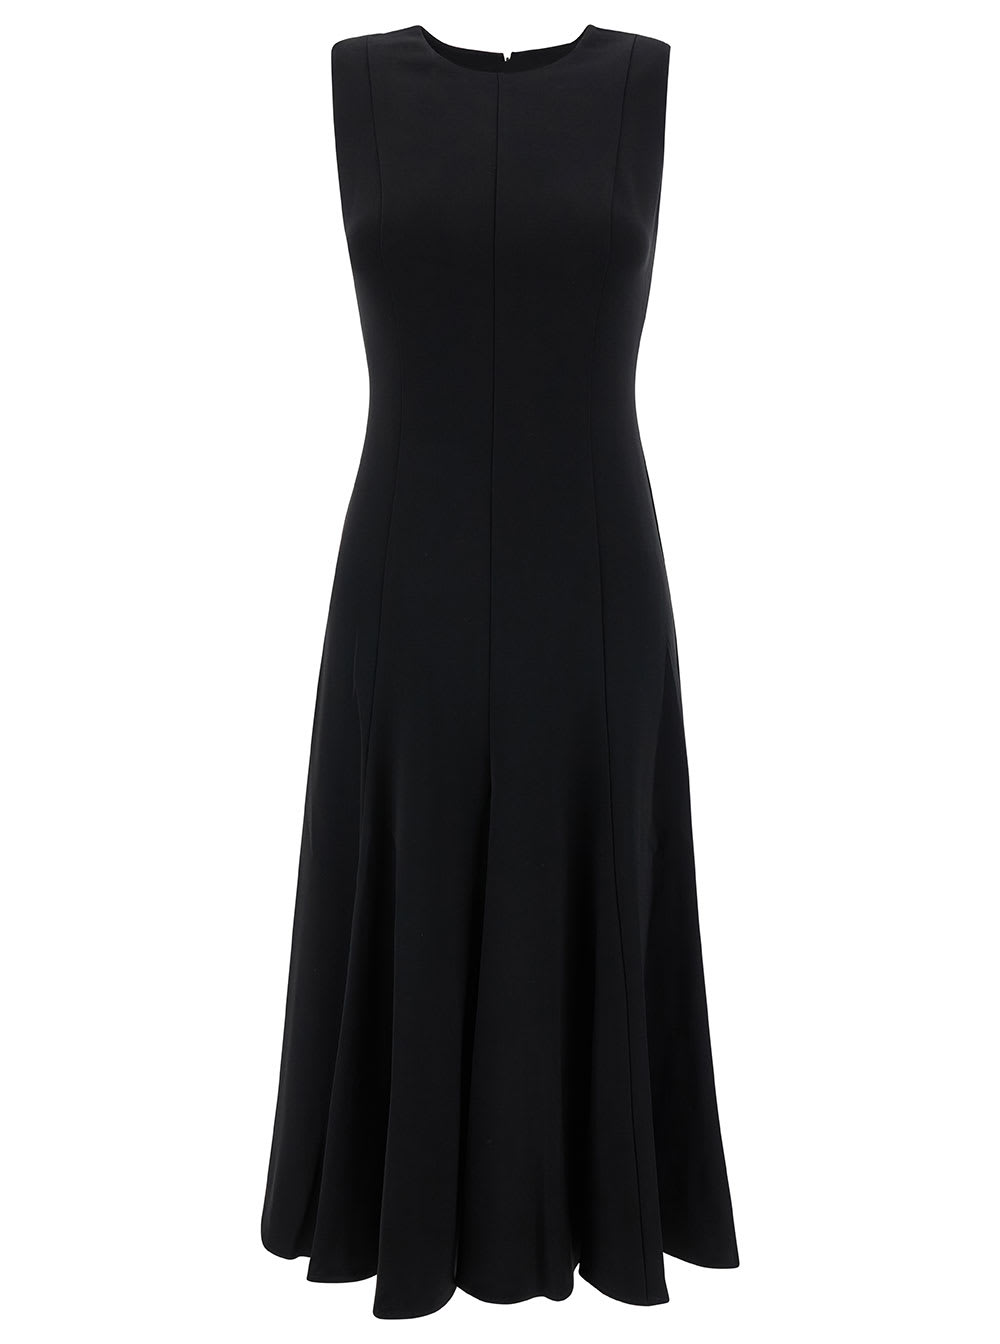 Midi Black Sleeveless Dress With Pleated Skirt In Triacetate Blend Woman